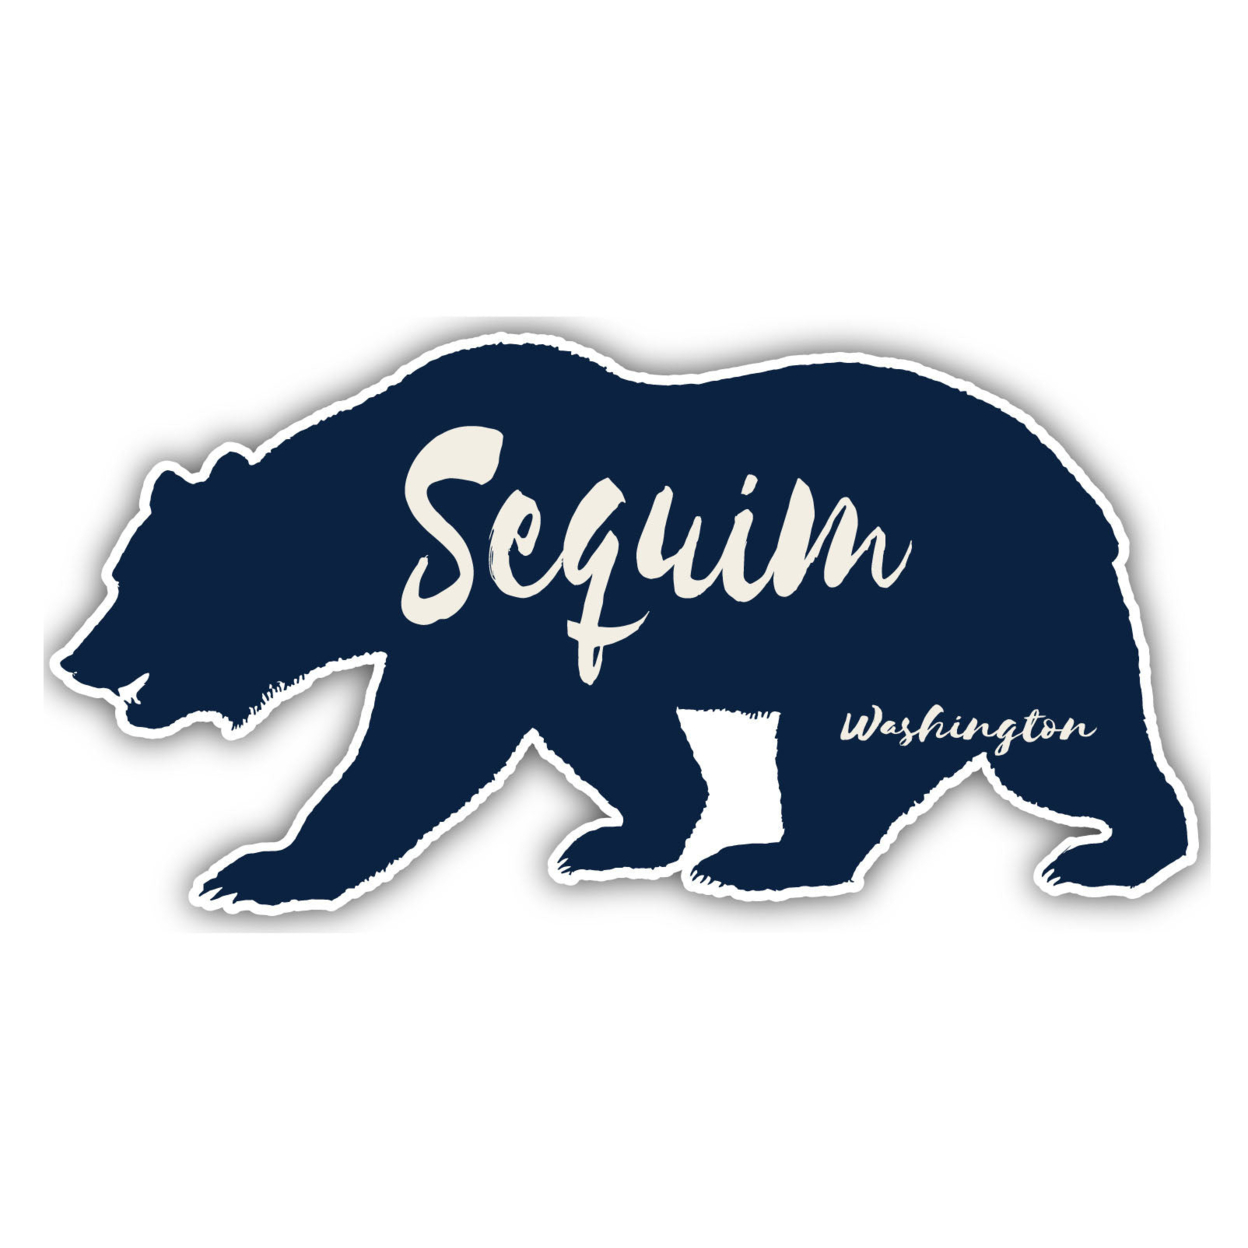 Sequim Washington Souvenir Decorative Stickers (Choose Theme And Size) - Single Unit, 2-Inch, Camp Life